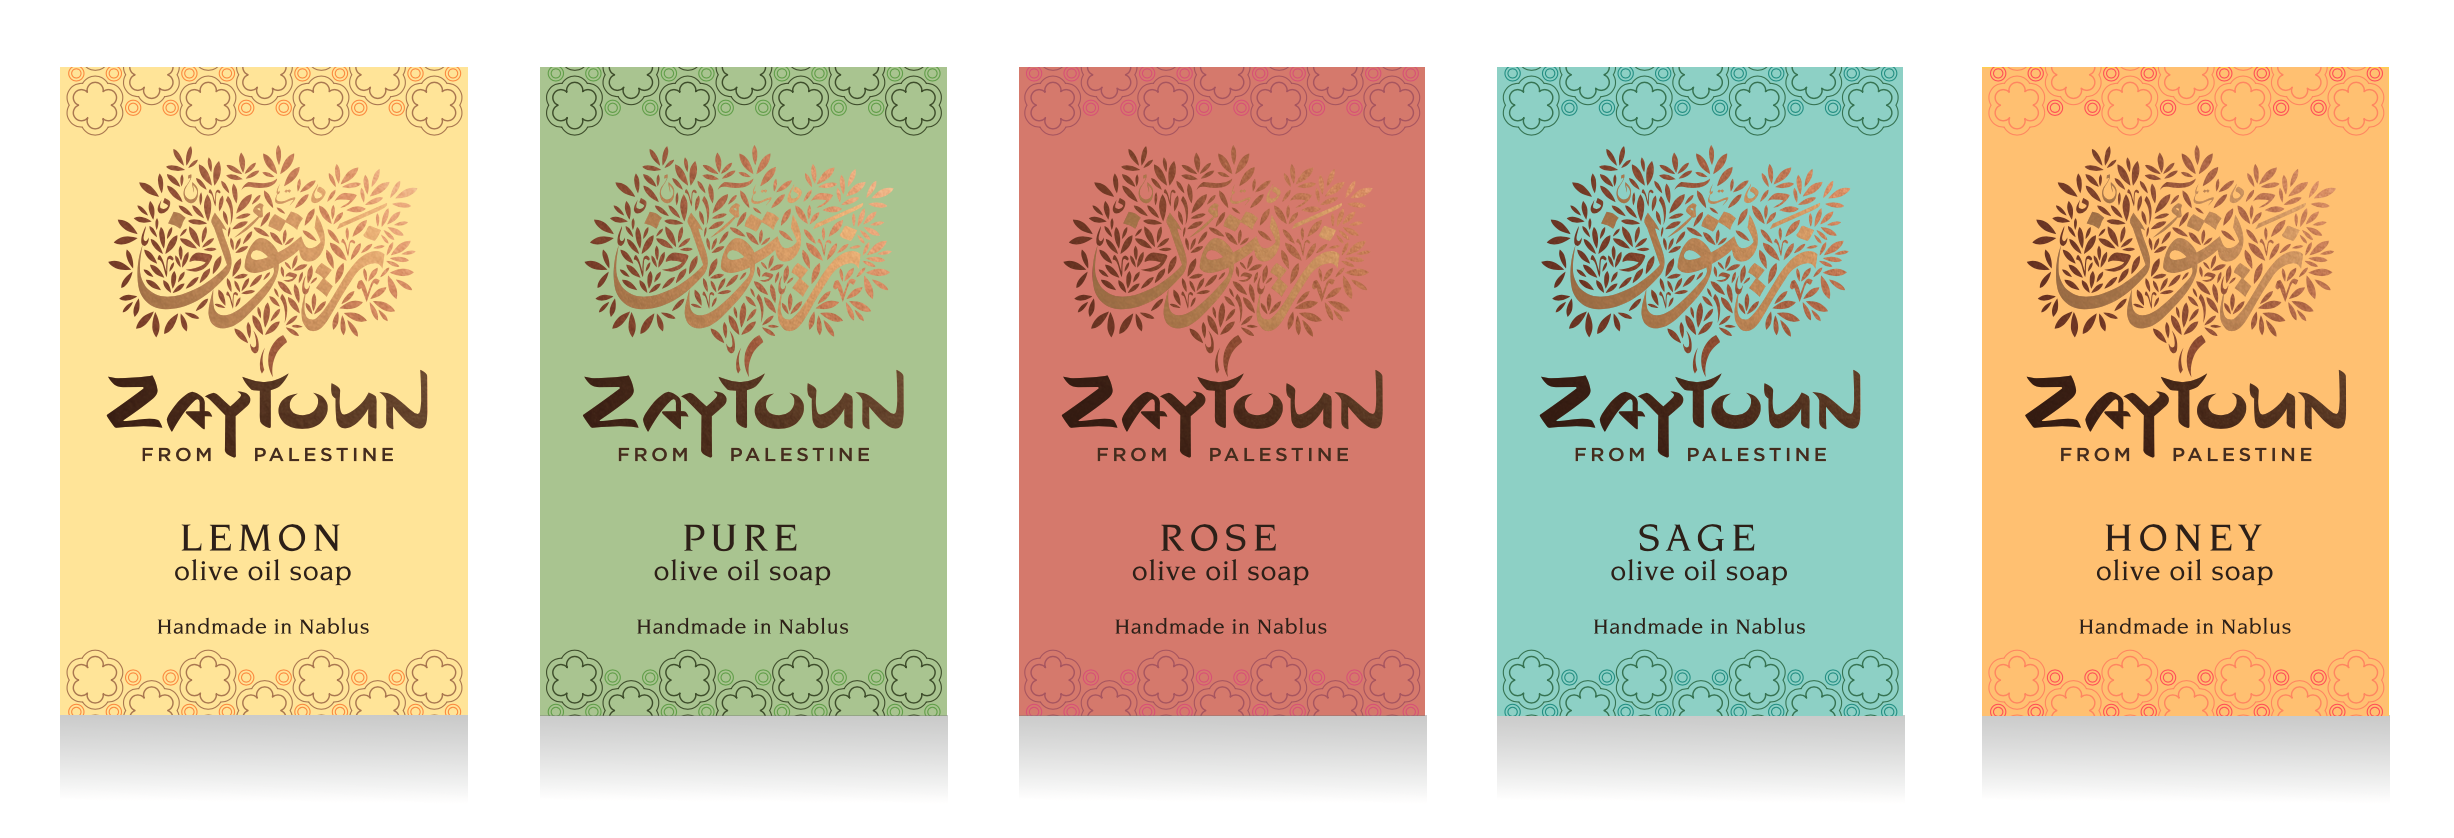 Zaytoun Organic Palestinian Products Olive Oil Soap and majhoul dates